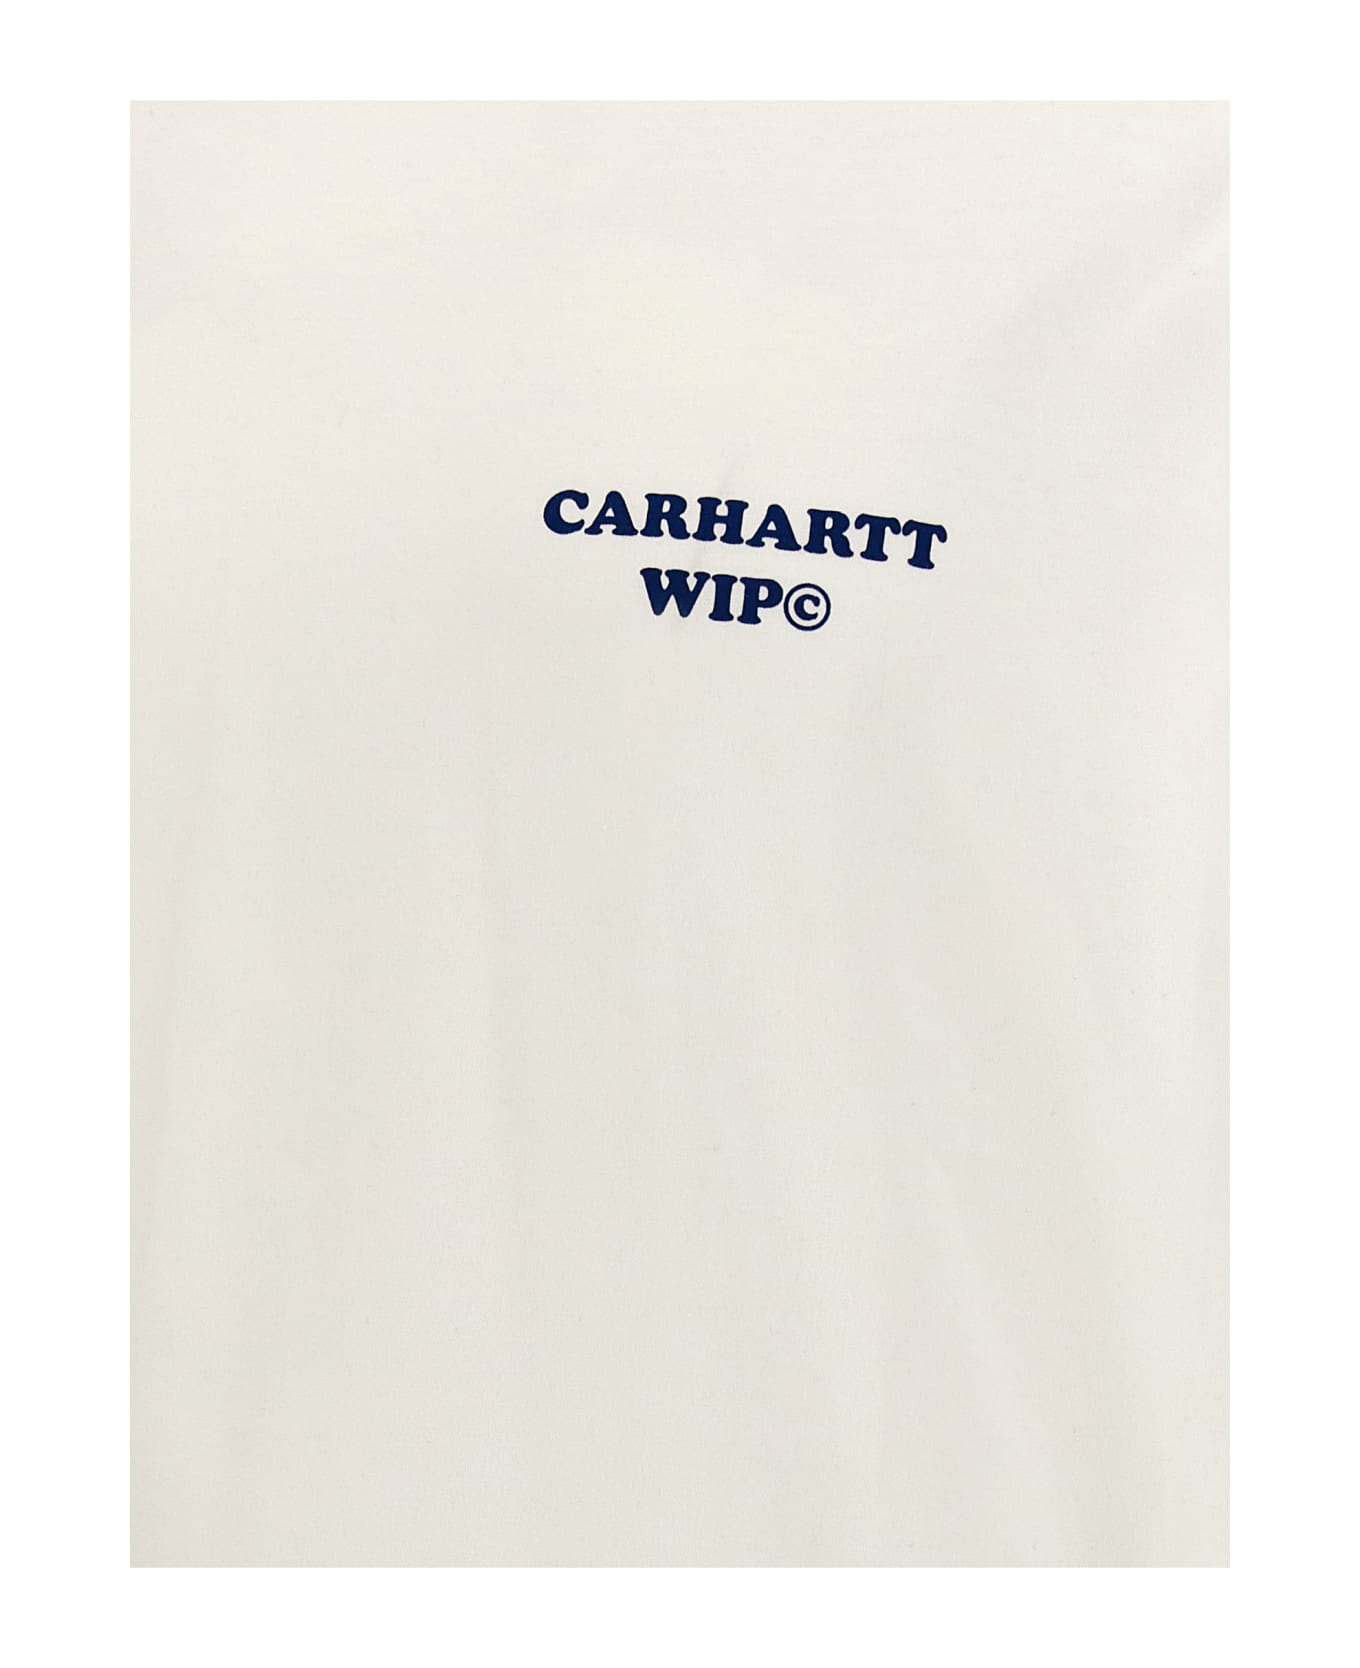 Carhartt 'isis Maria Dinner' T-shirt - White